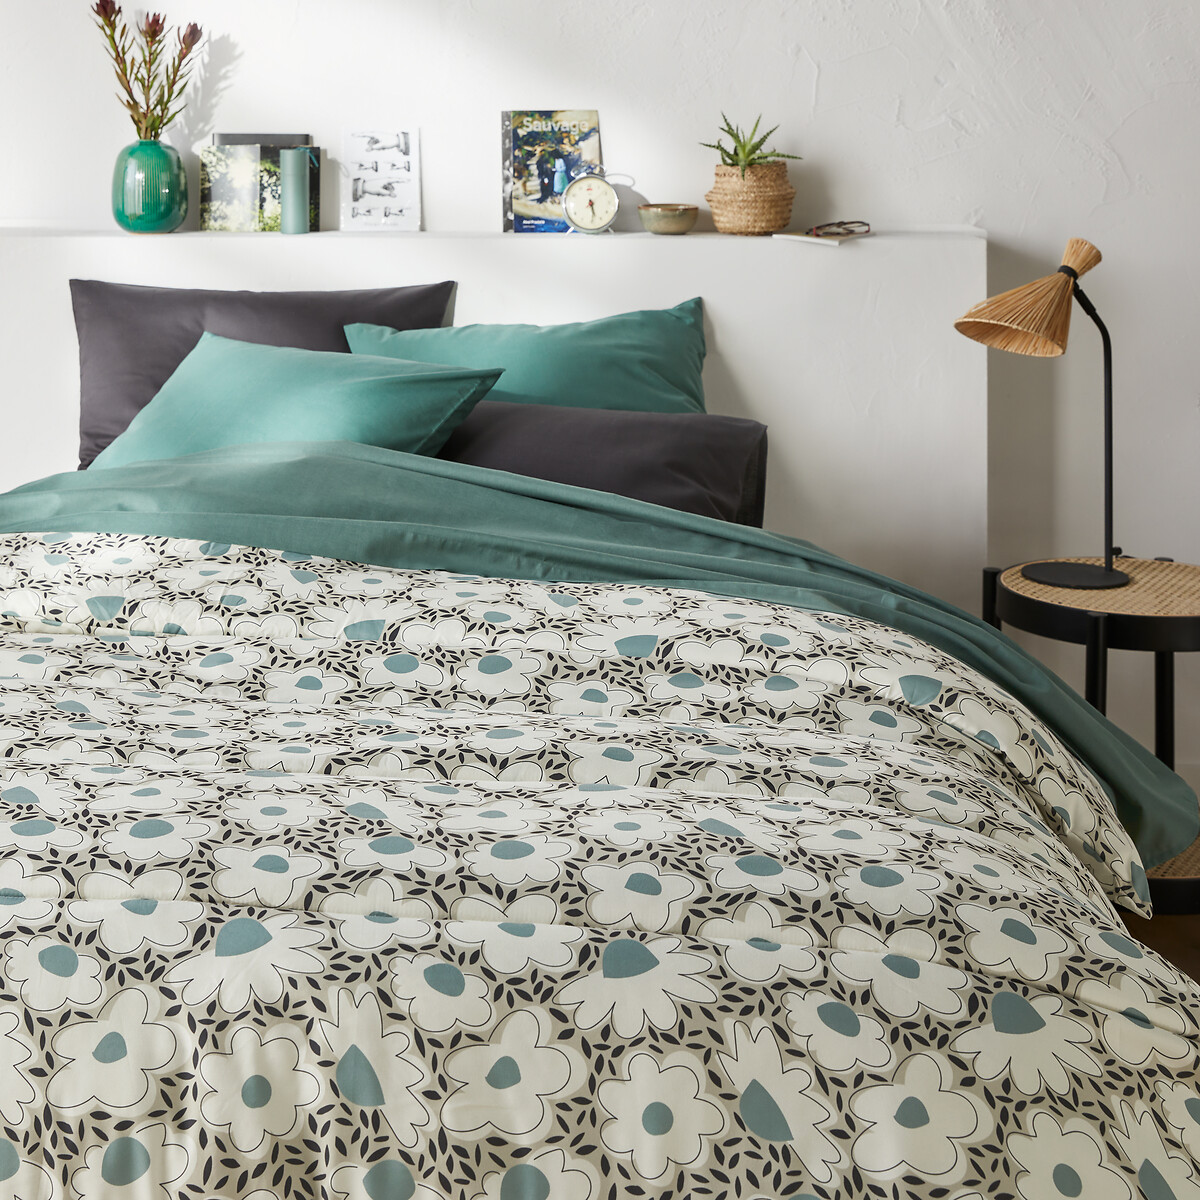 Amazing floral Quilt - Bedding